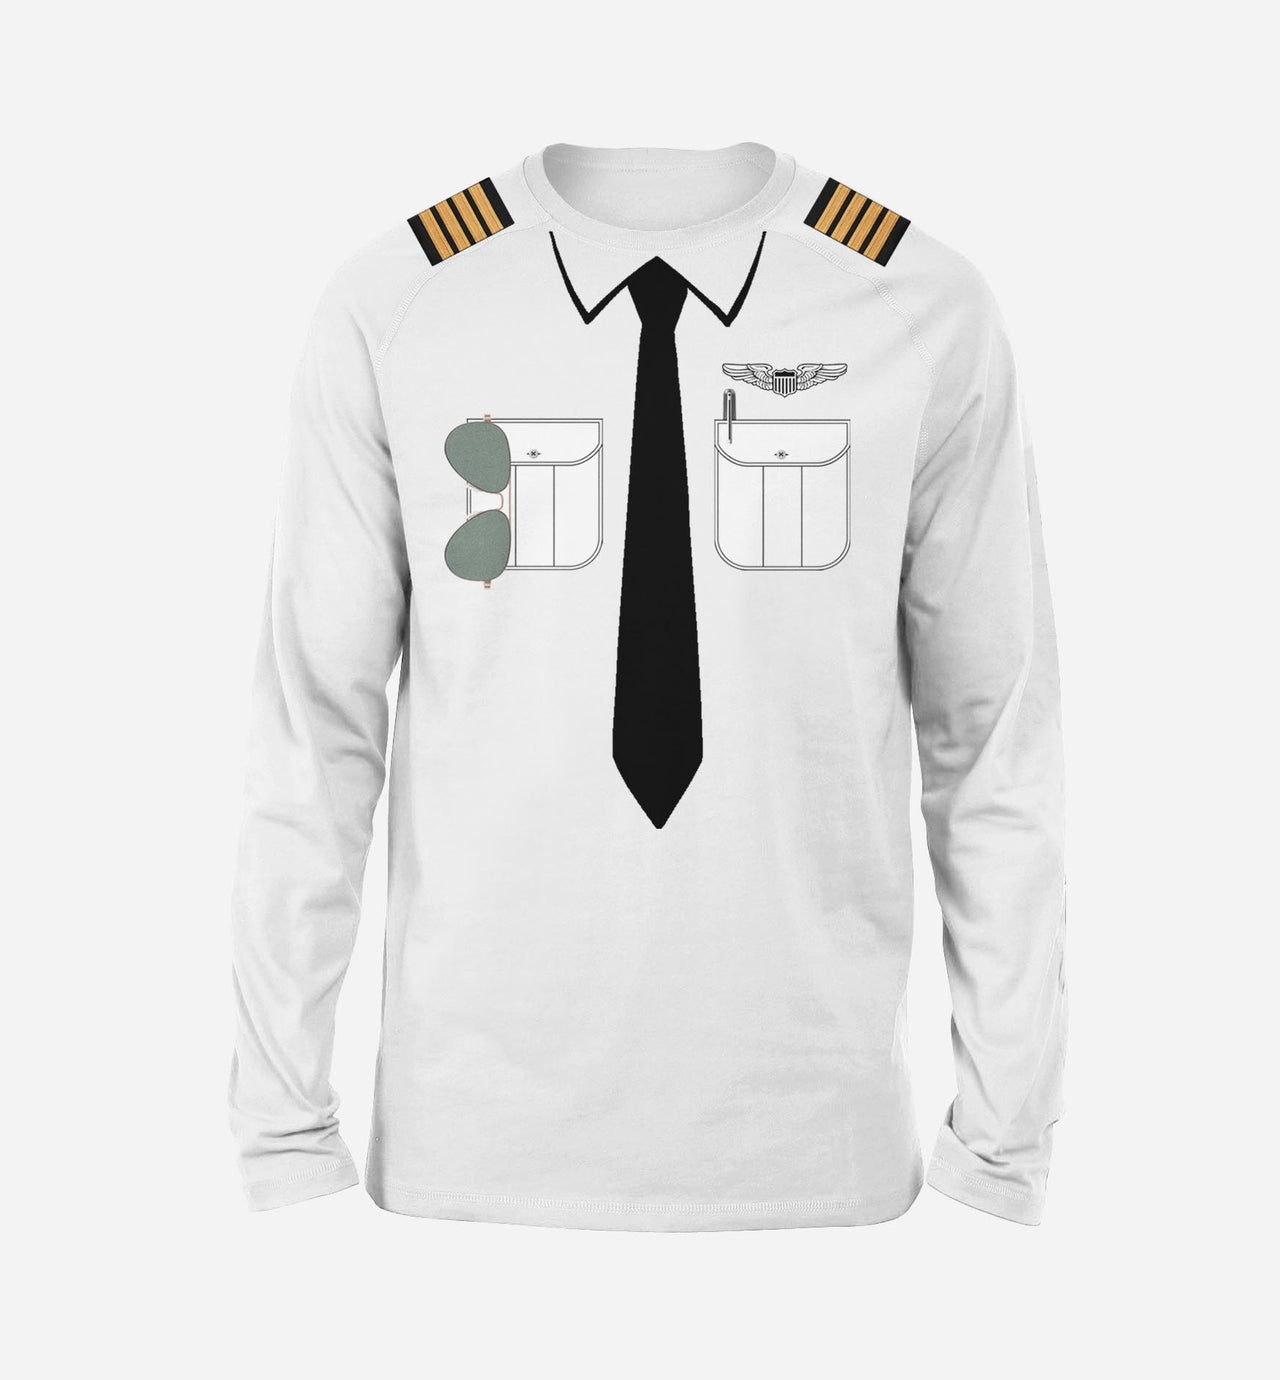 Customizable Pilot Uniform (Badge 1) Designed "Long Sleeve" T-Shirts